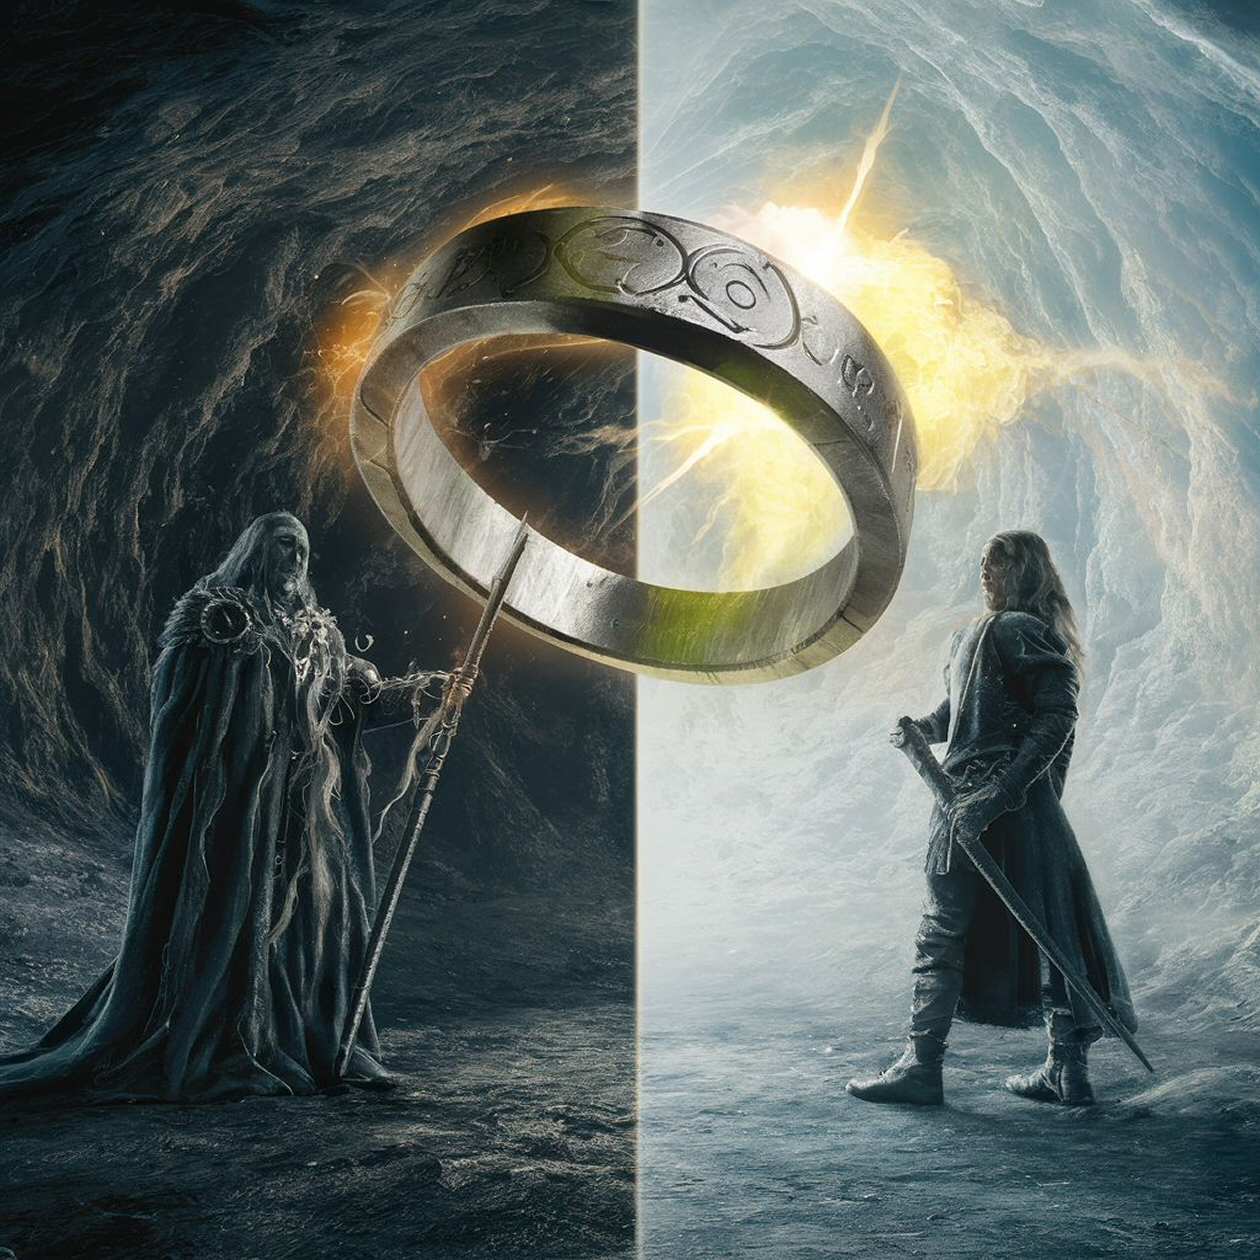 lotr, the one ring, good vs evil, choice